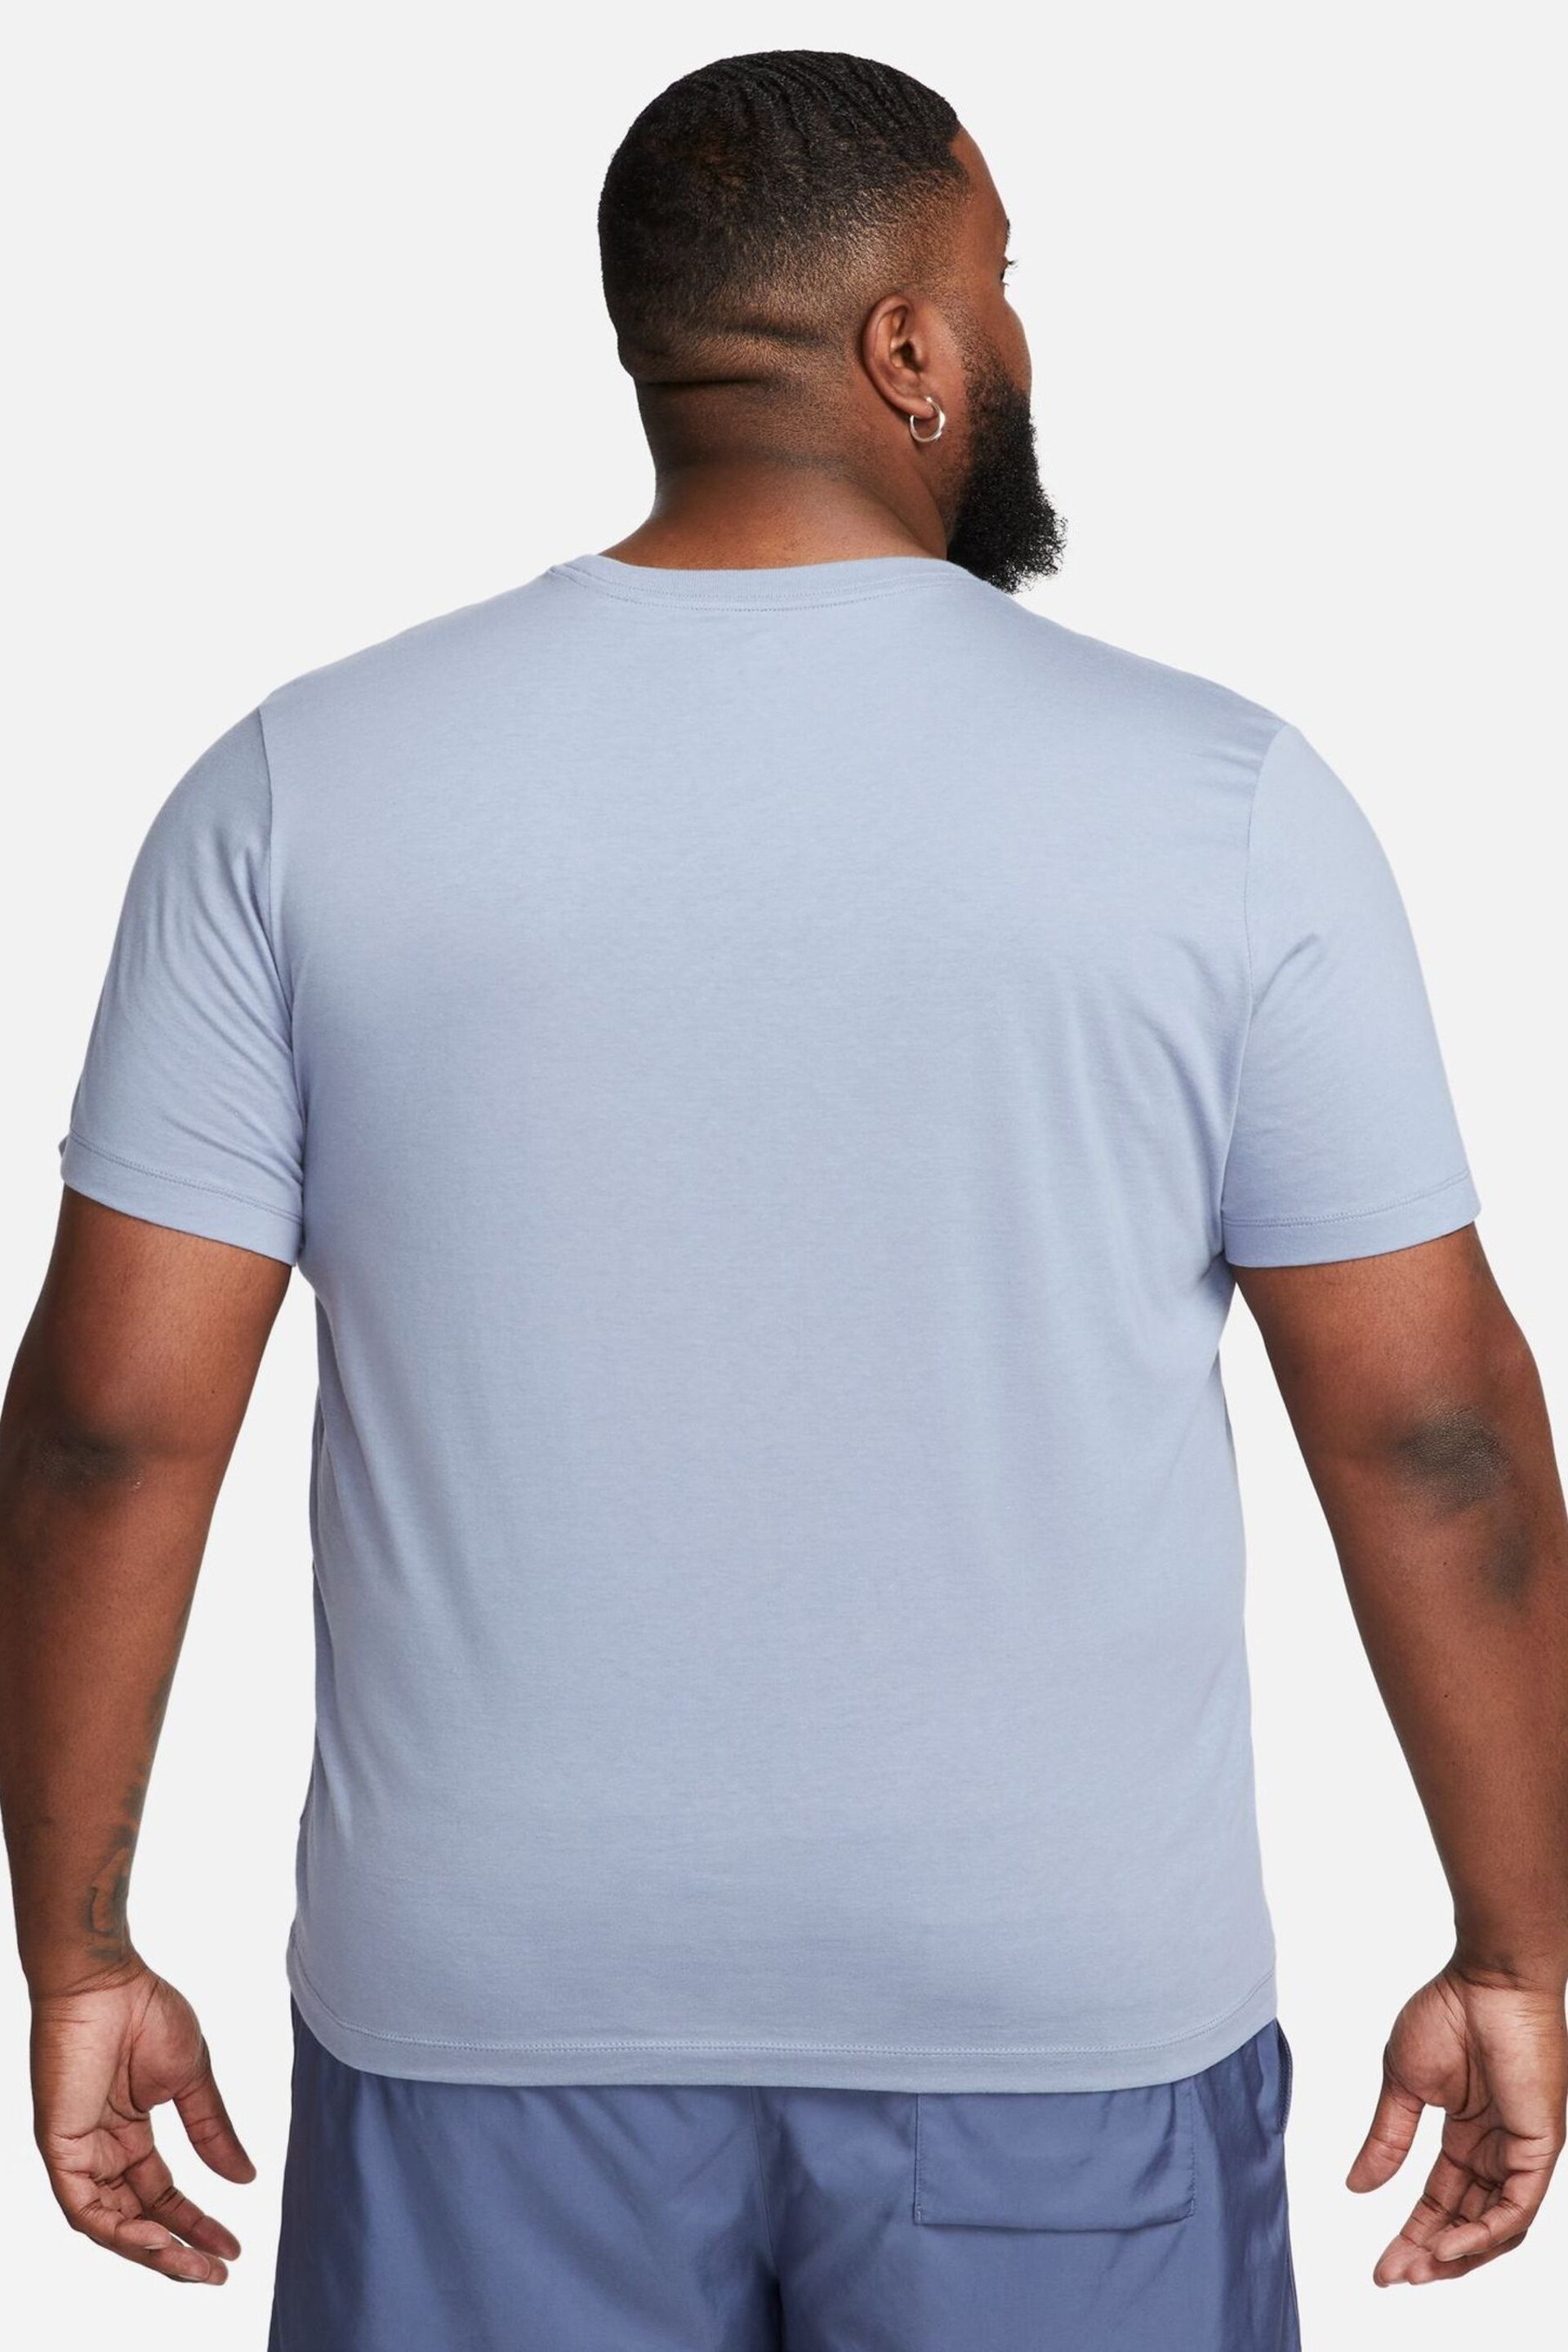 Nike Slate Grey Club T-Shirt - Image 6 of 9